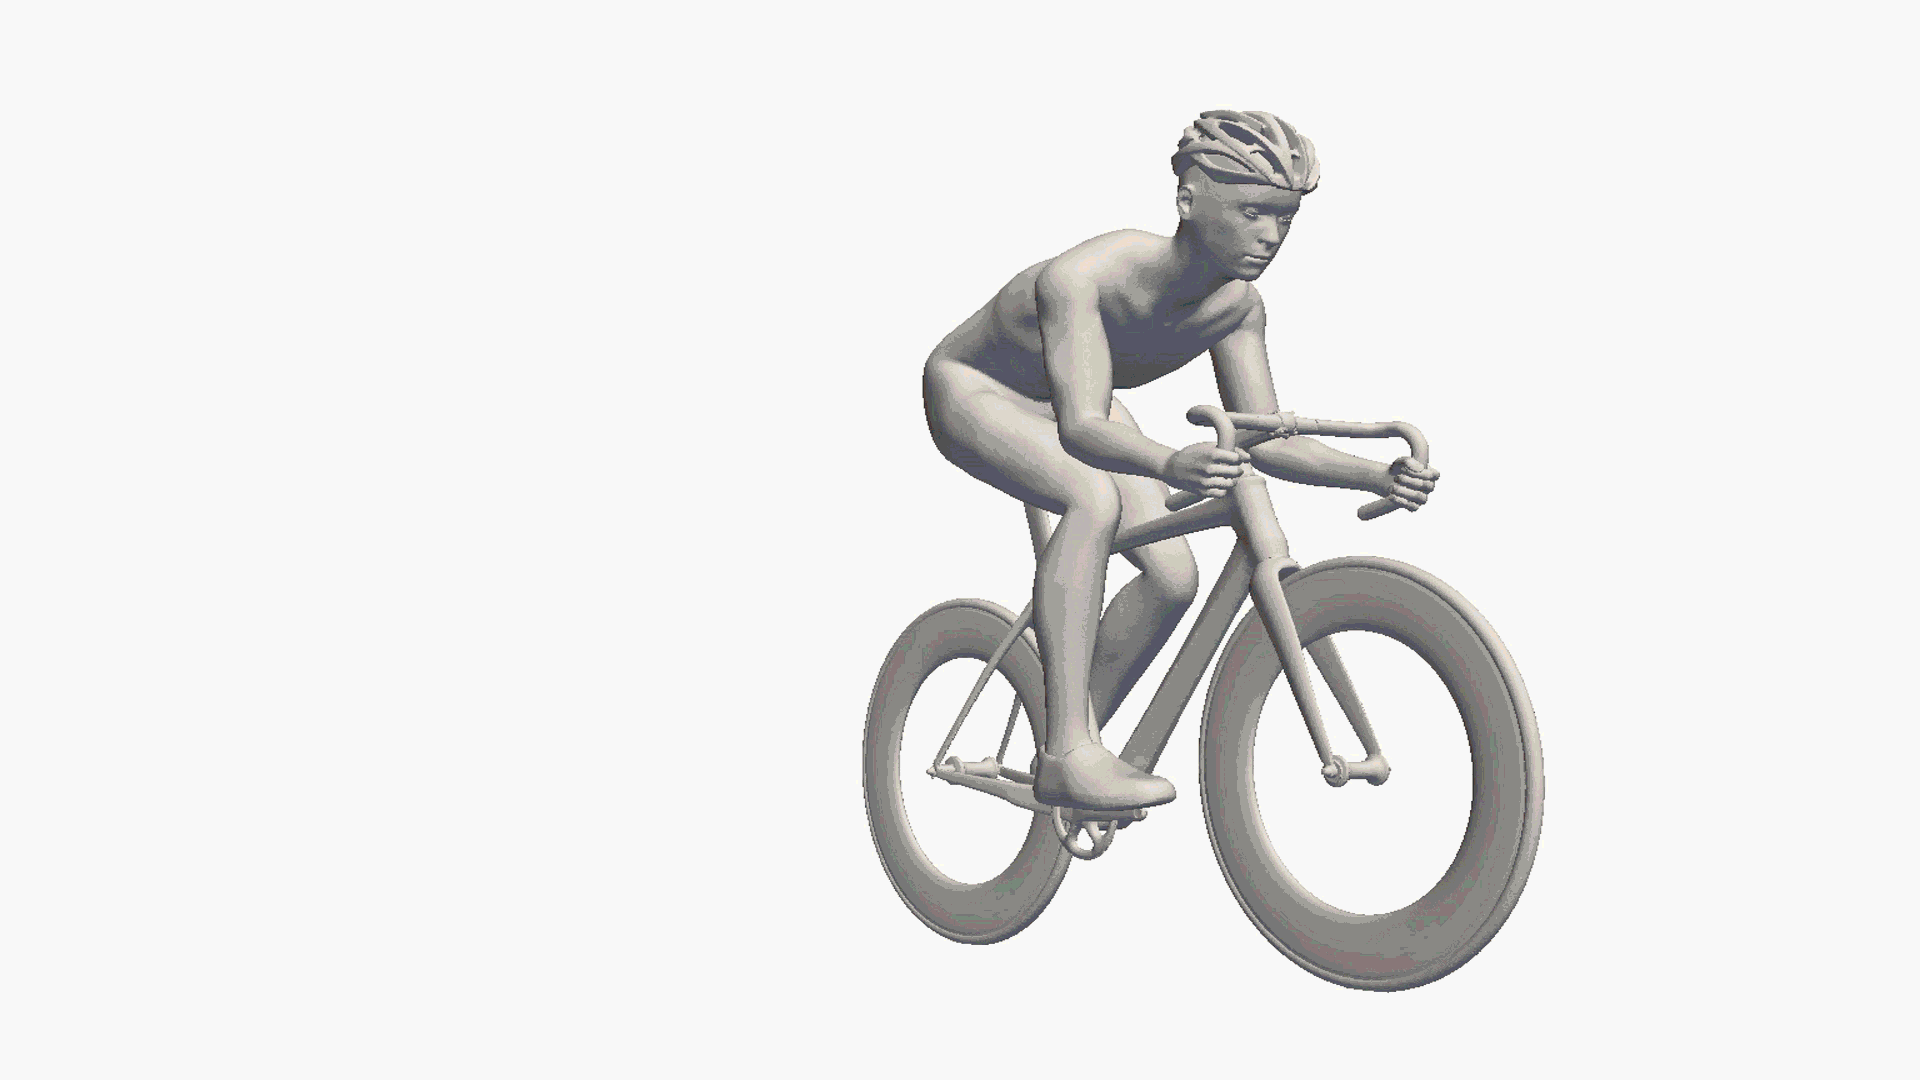 aerodynamics of cycling